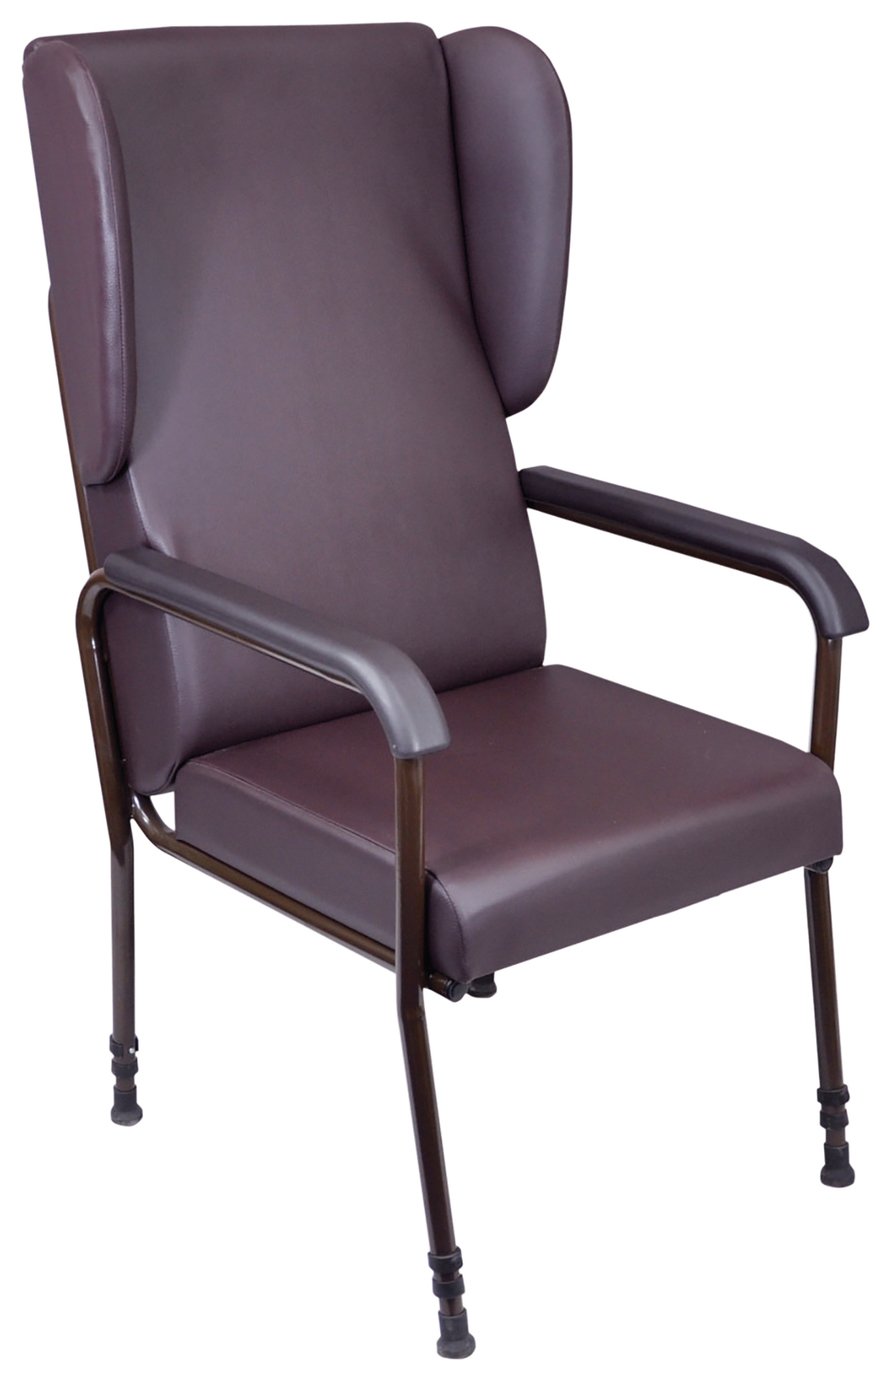 Aidapt Chelsfield Height Adjustable Chair